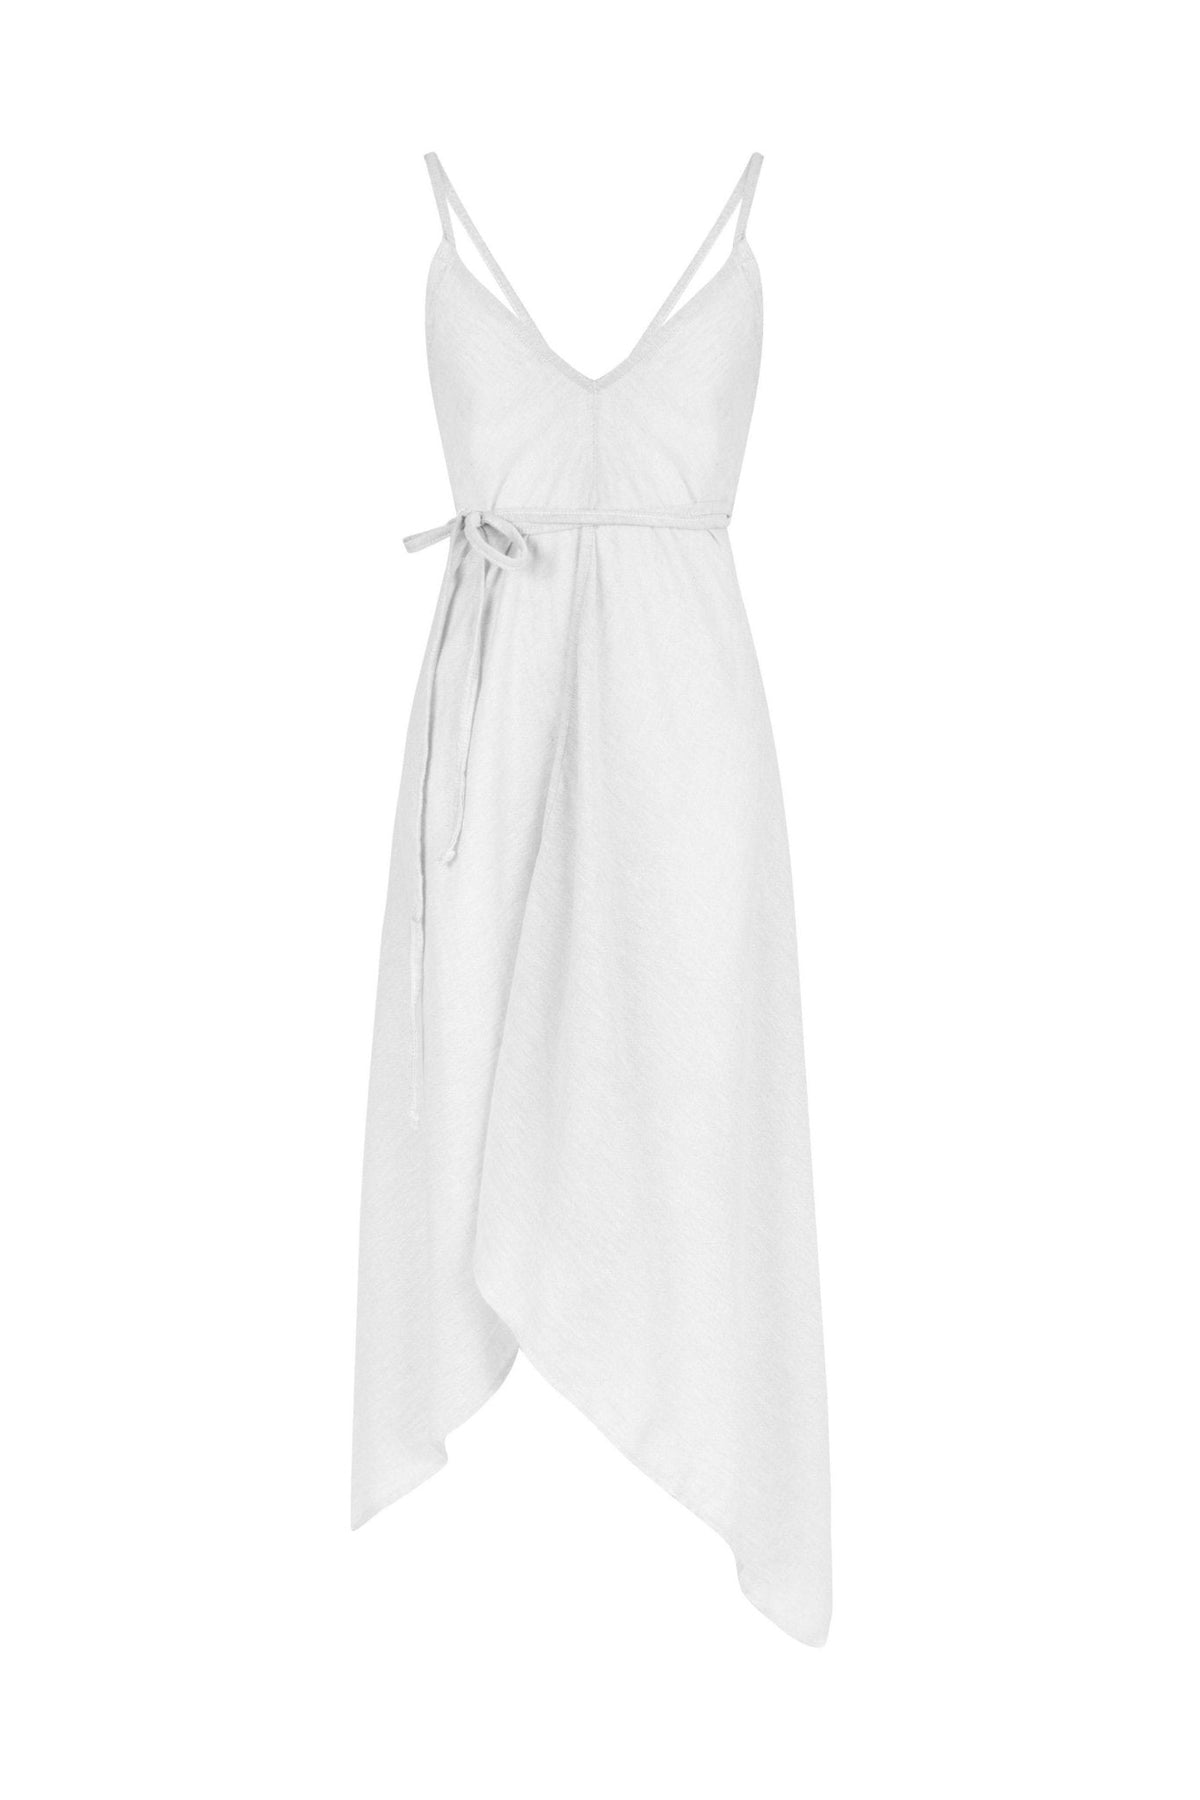 THE HAND LOOM Sage Maxi 100% Organic Cotton Womens Dress